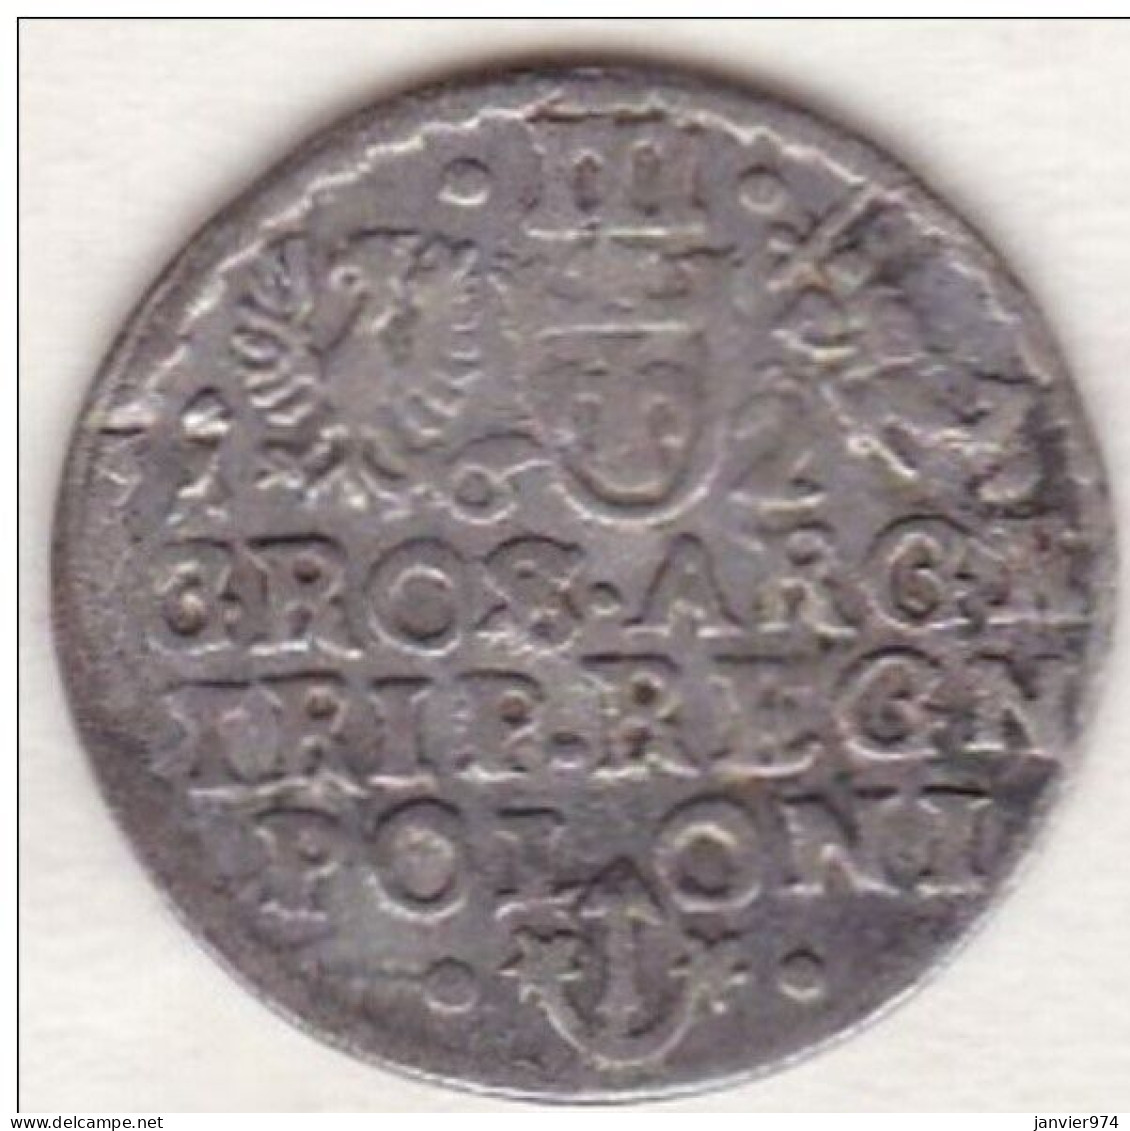 Pologne Lituanie, Trojak Polski - 3 Gros 1623 Sigismond III Vasa , En Argent - Polen